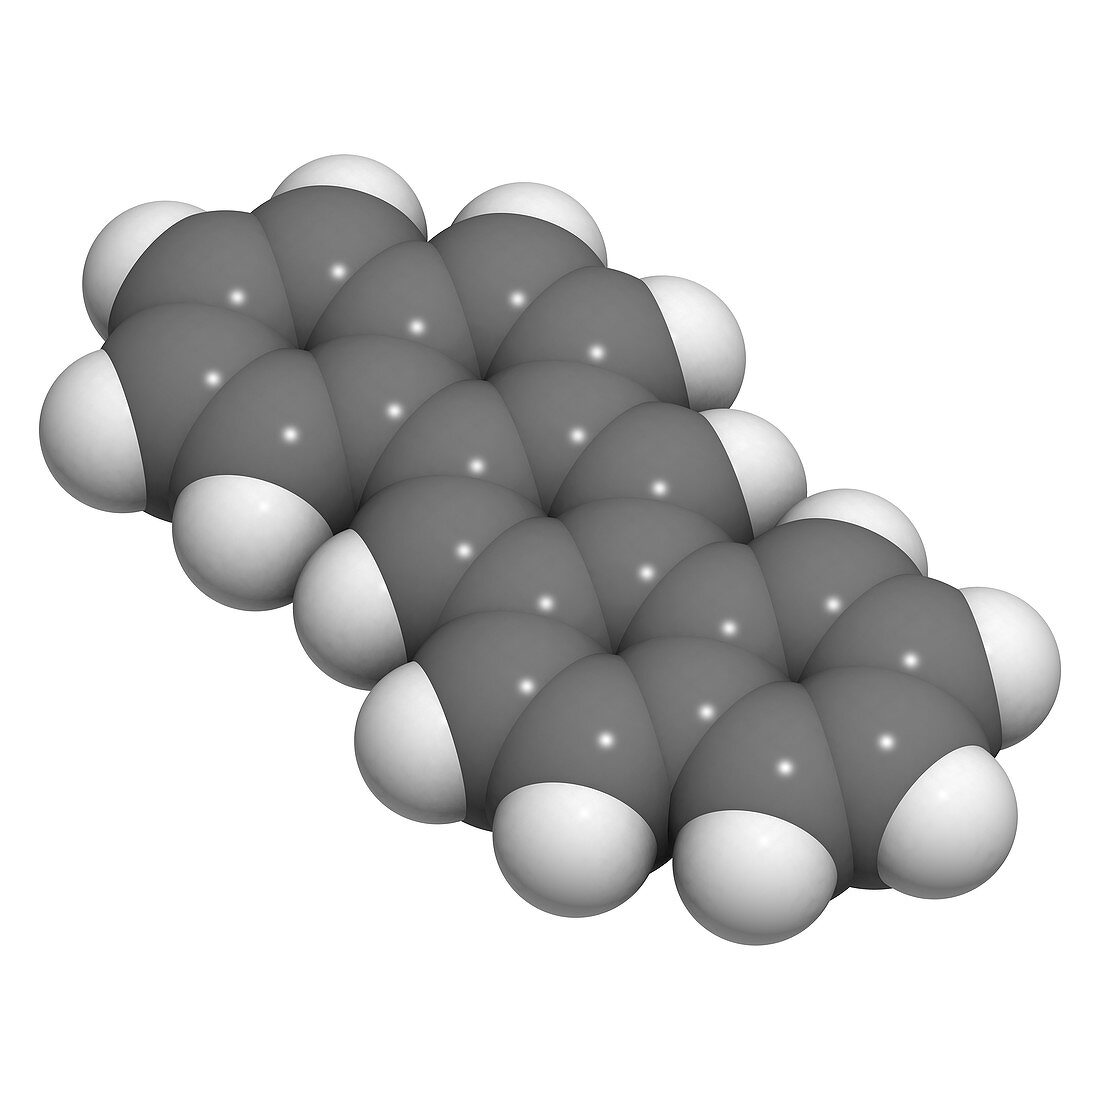 Dibenzanthracene hydrocarbon molecule